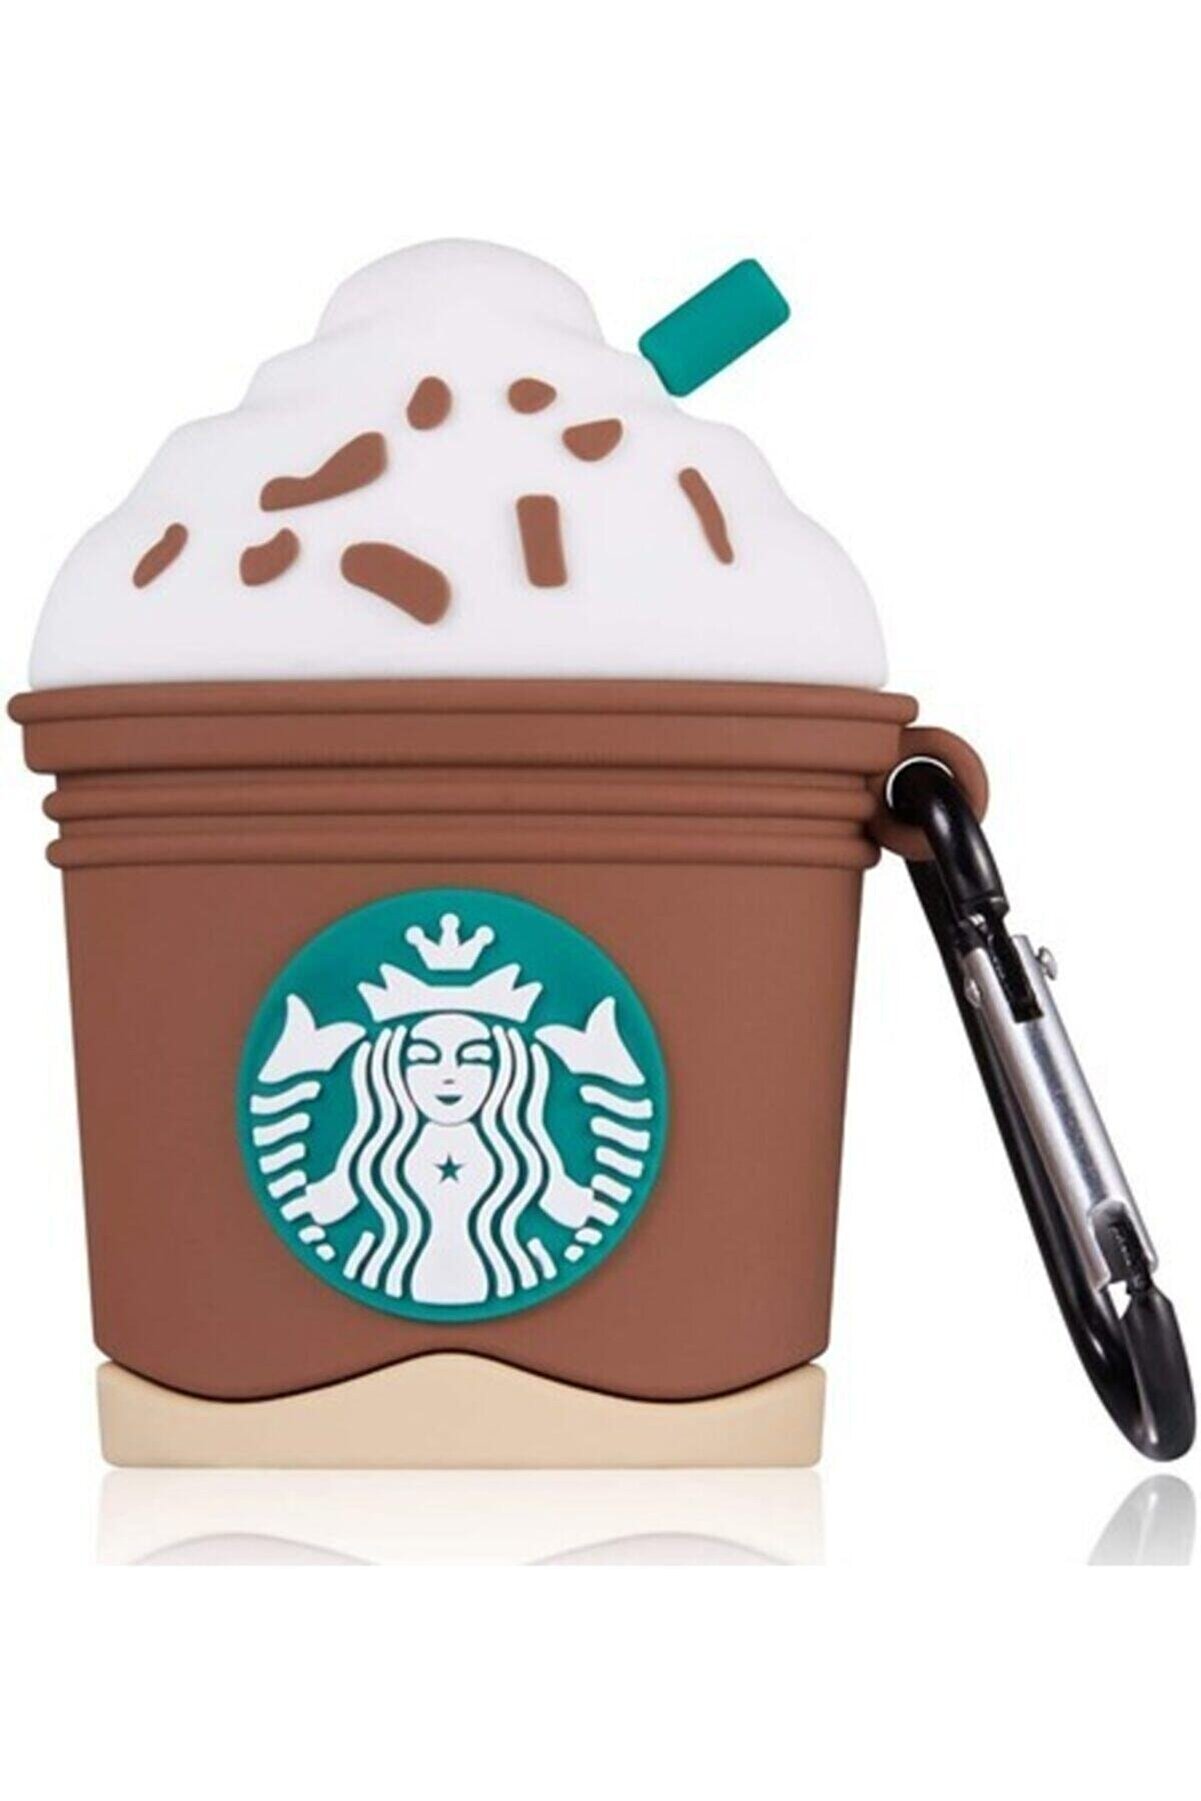 MY MÜRDÜM Sevimli Starbucks Kahverengi Airpods Kılıfı 1. Ve 2. Nesil Uyumlu